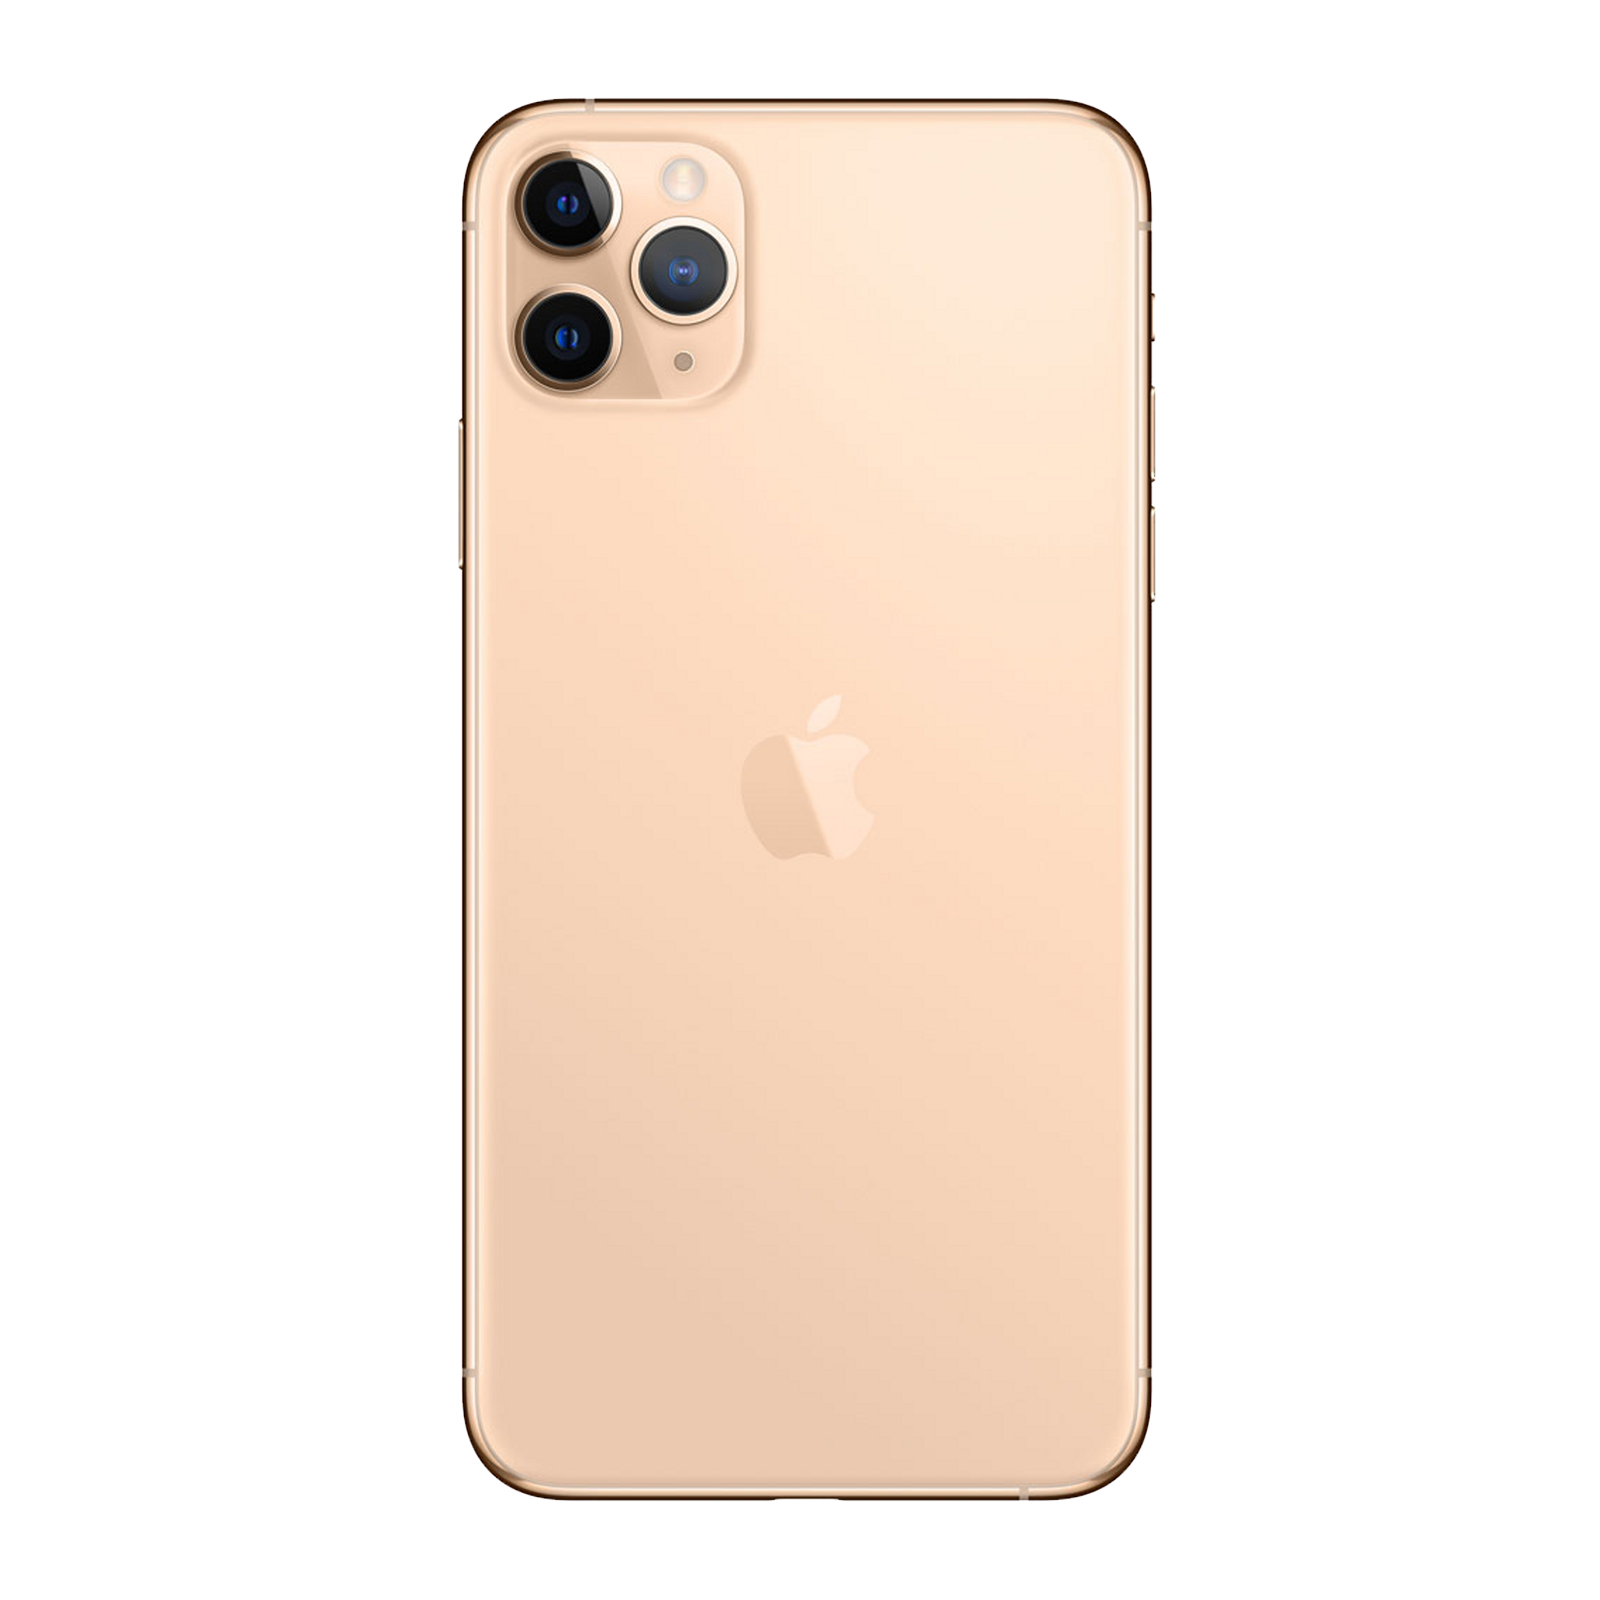 Apple iPhone 11 Pro 256GB Gold Pristine - Unlocked